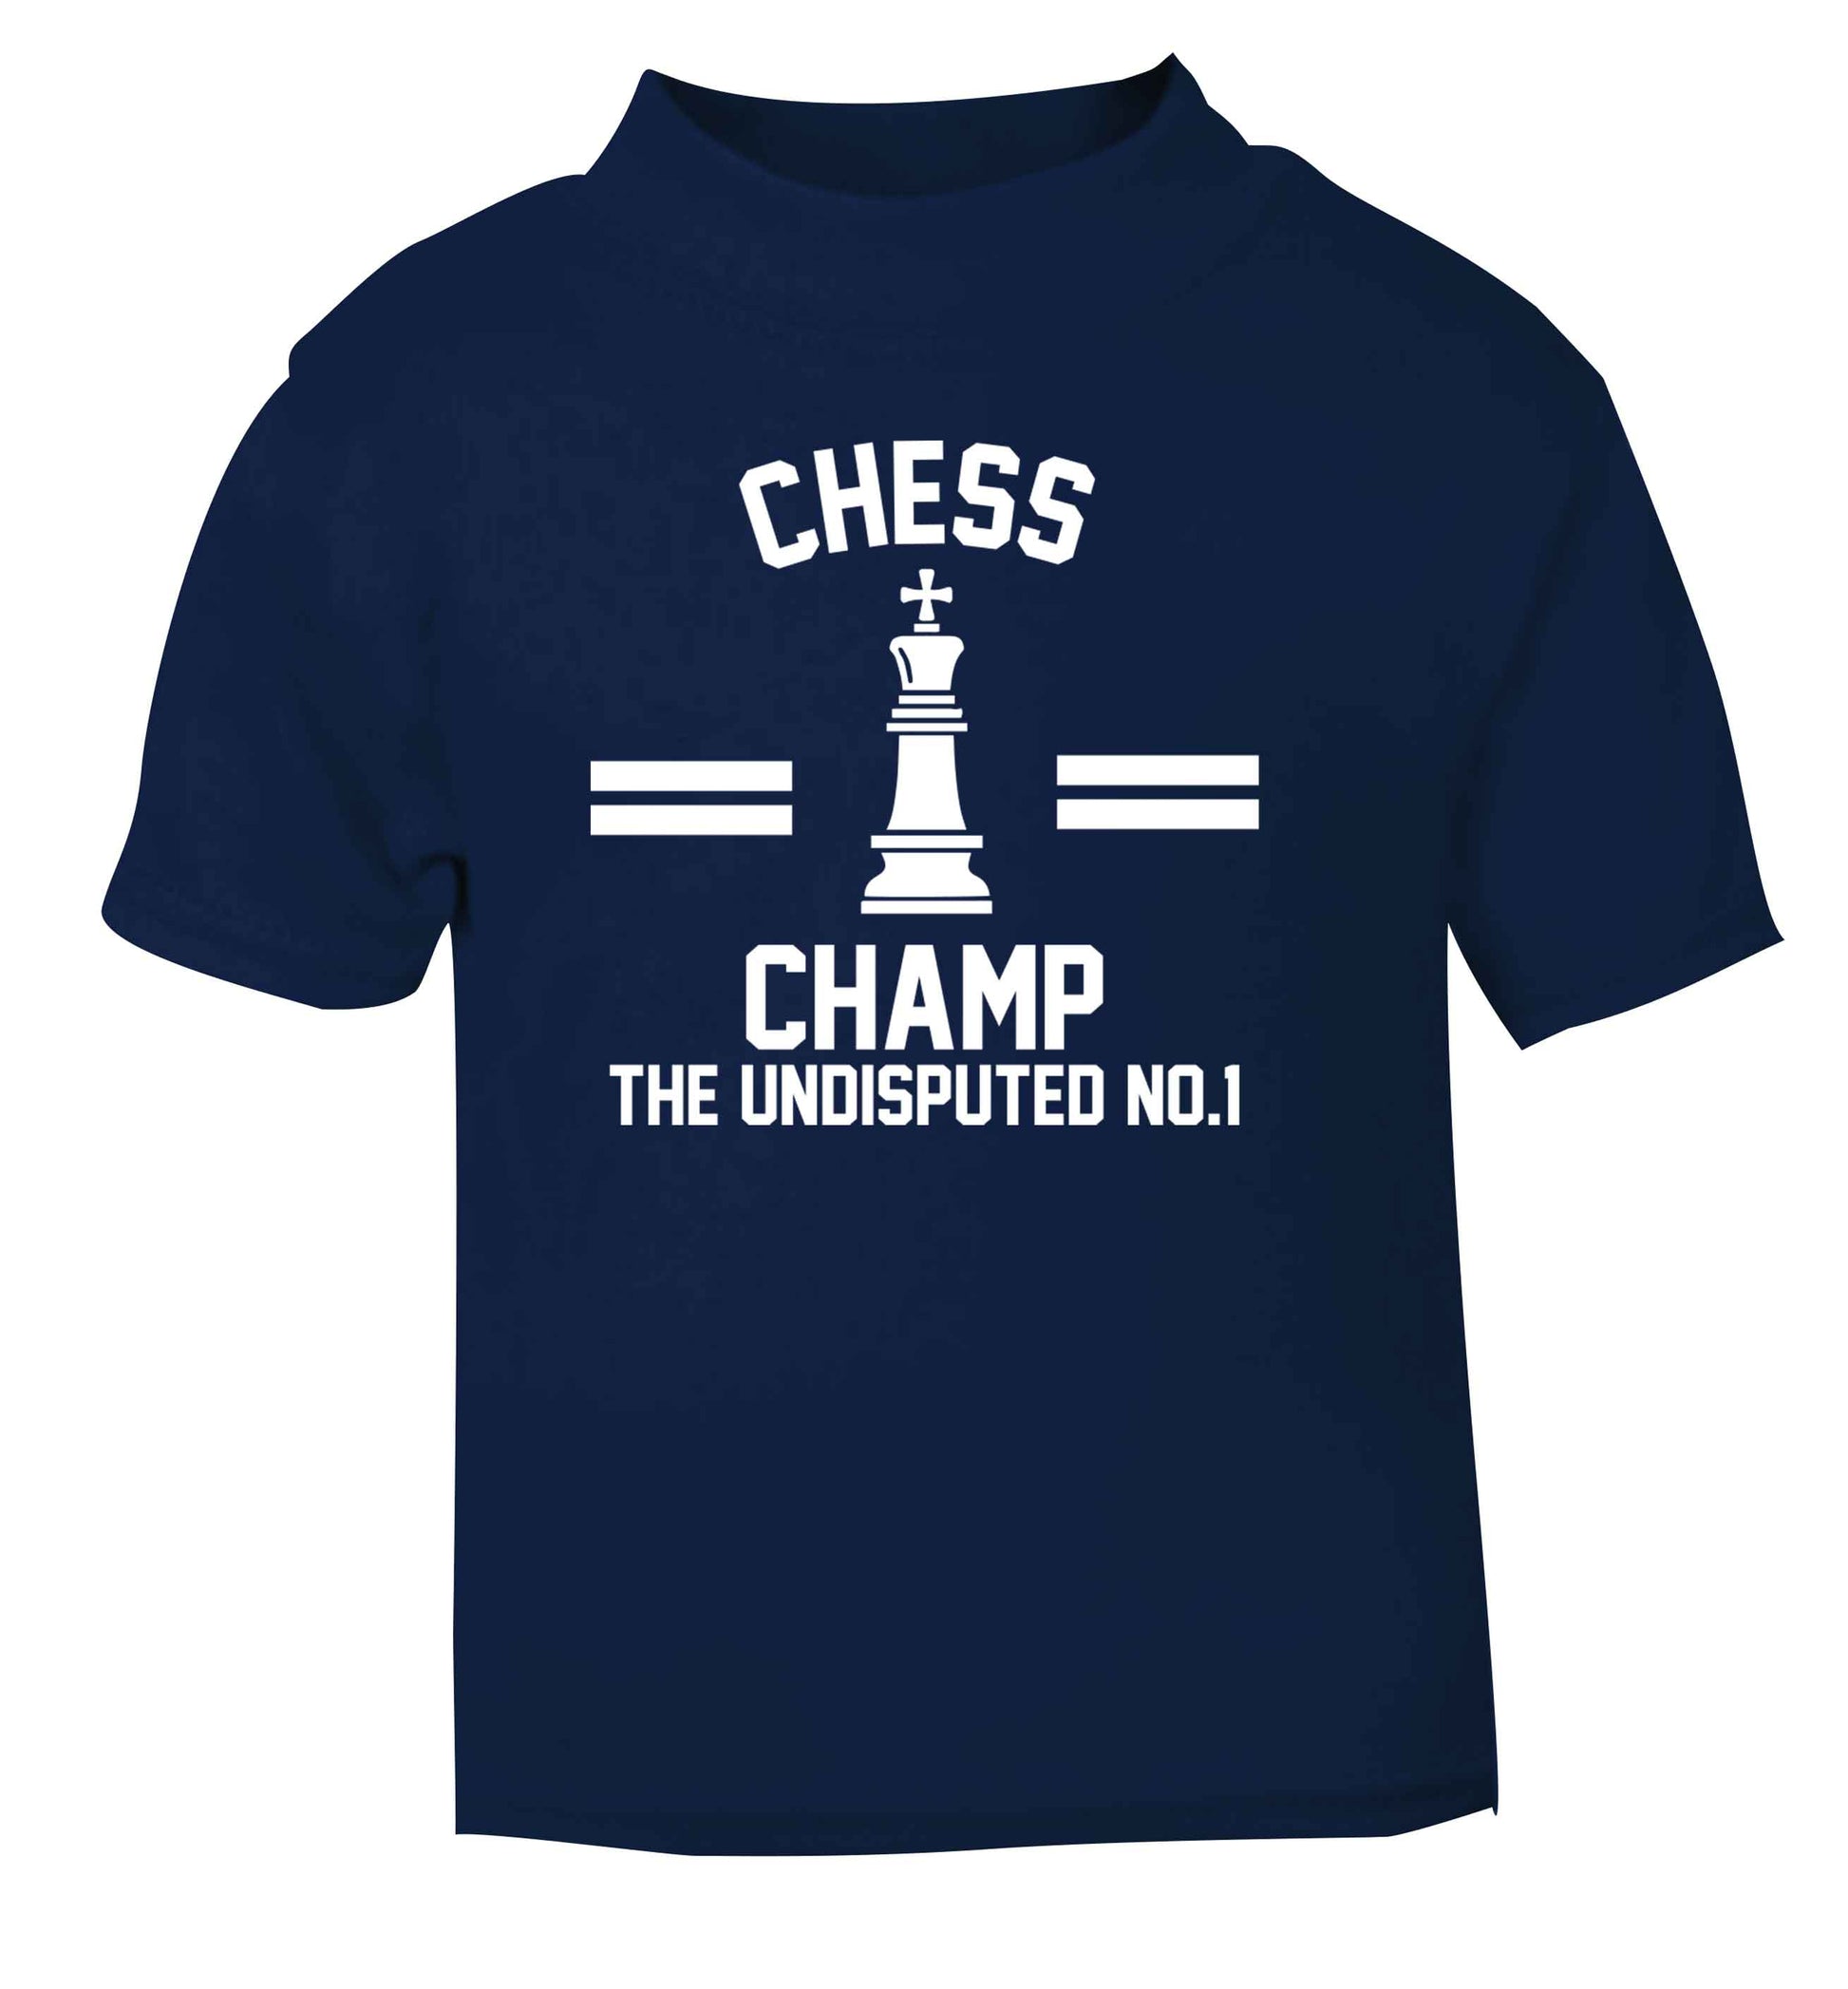 Undisputed chess championship no.1  navy Baby Toddler Tshirt 2 Years